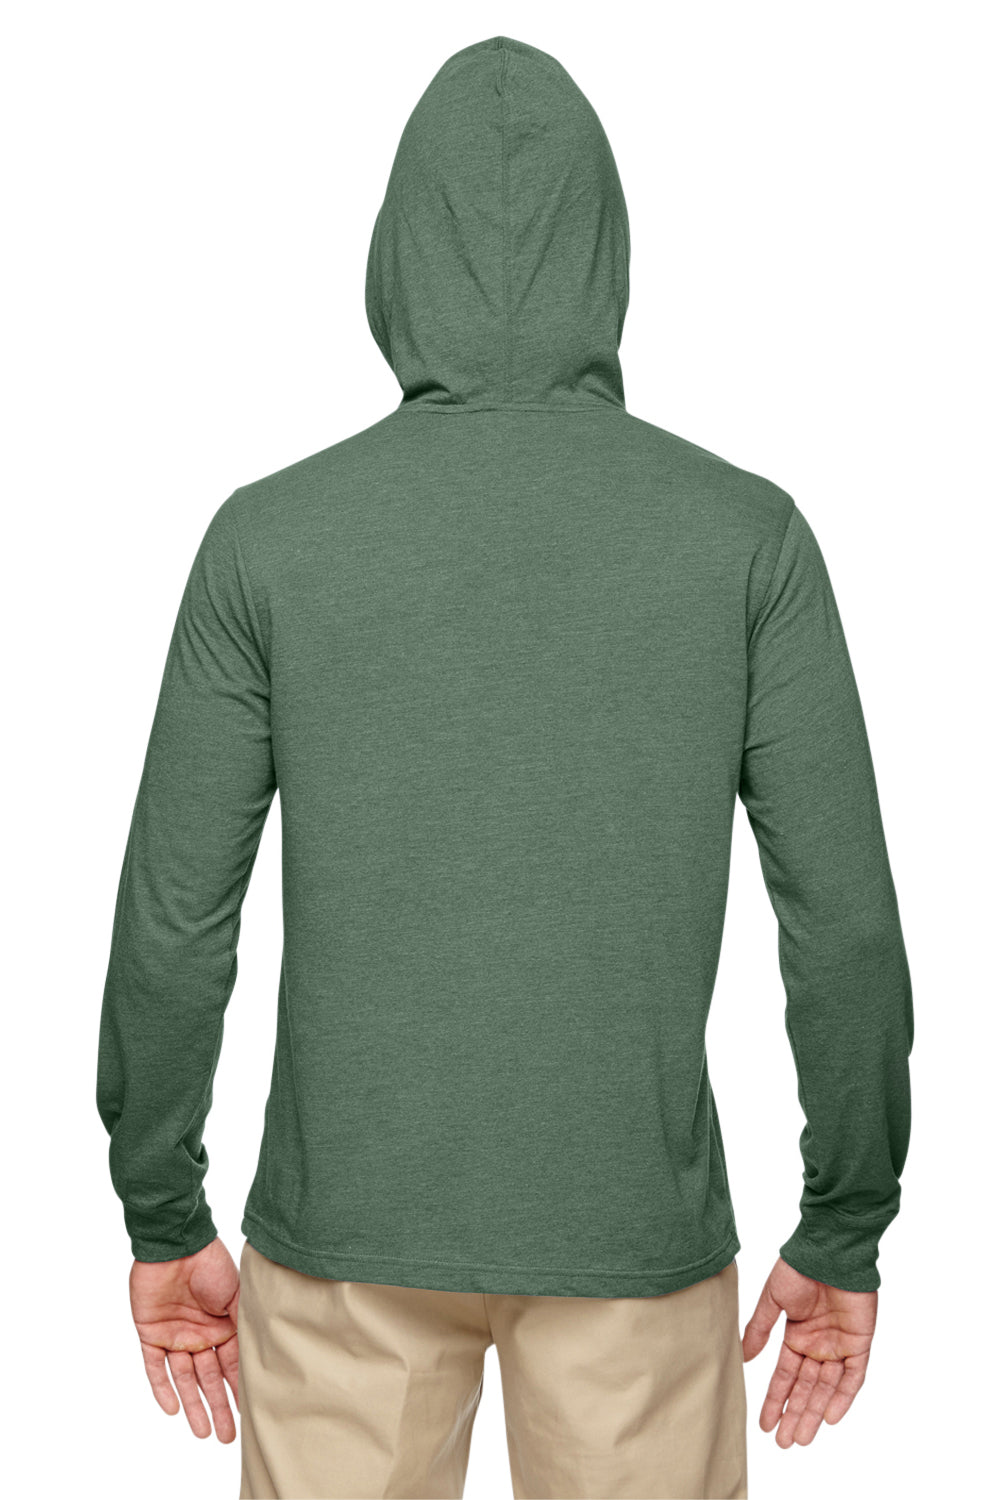 Econscious EC1085 Mens Eco Jersey Hooded Sweatshirt Hoodie Asparagus Green Back